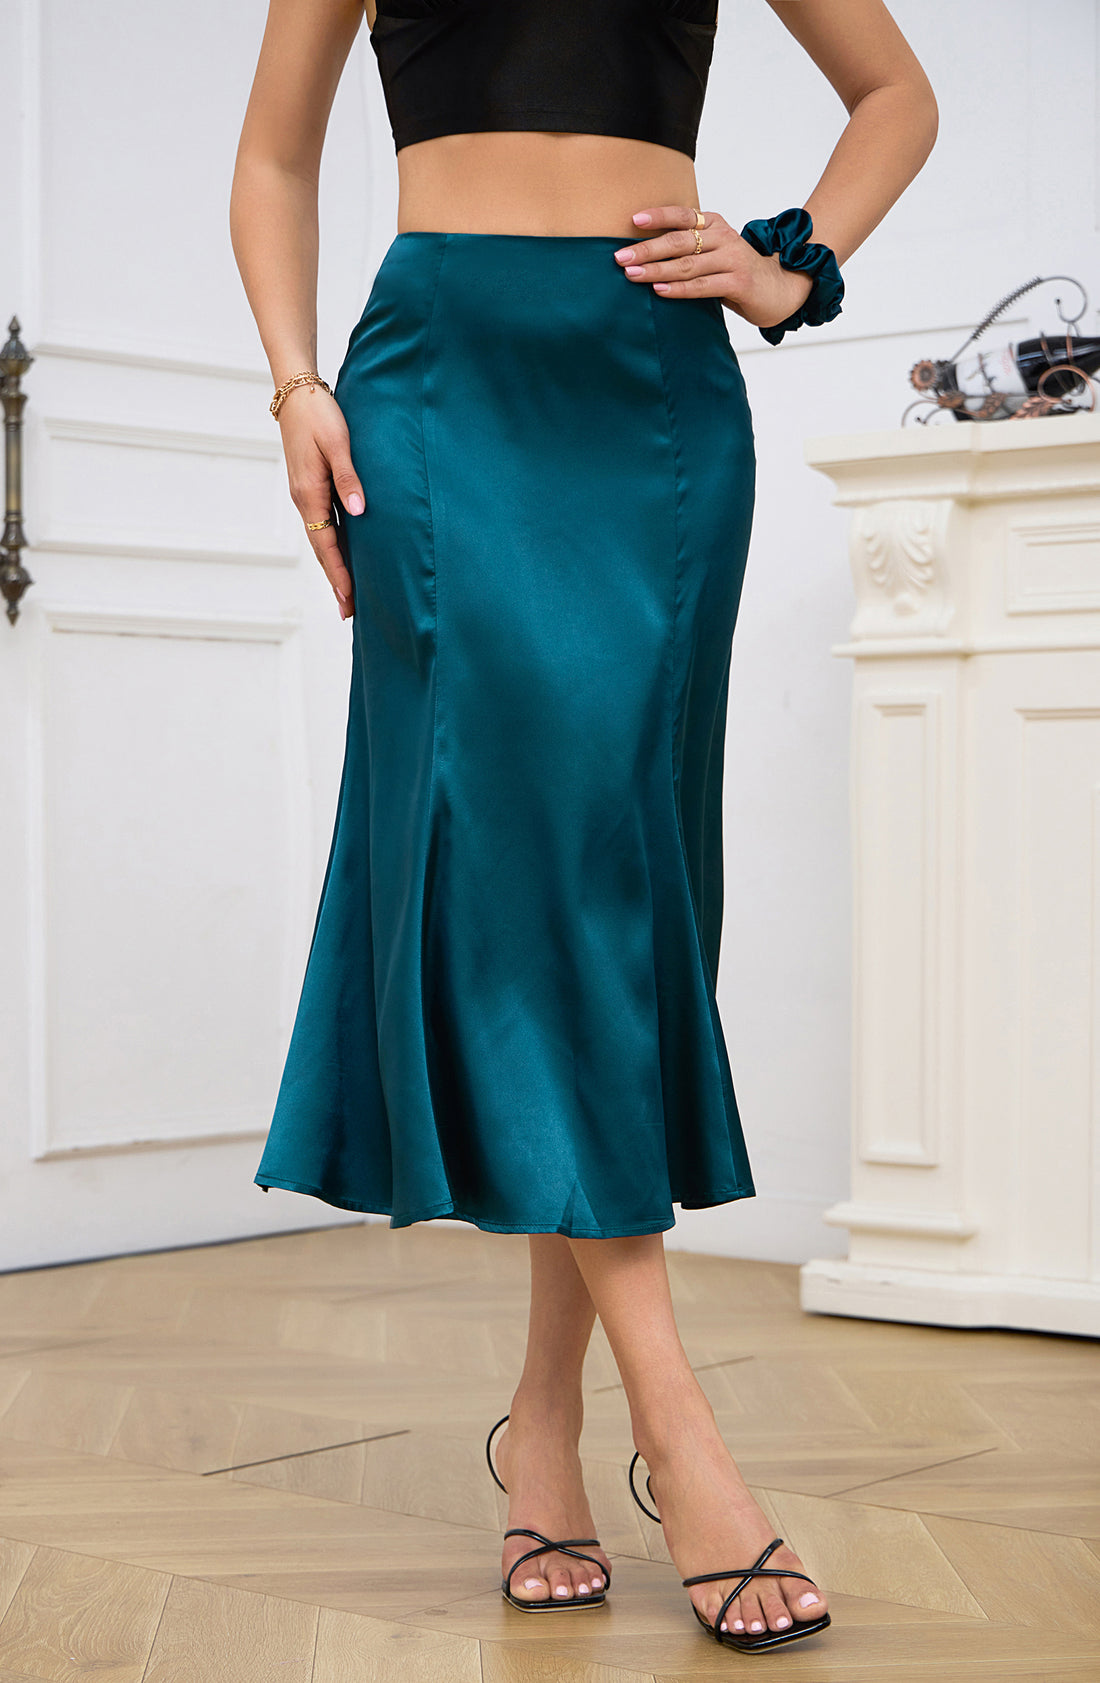 Alcea Rosea 女式缎面中长裙 A 字型高腰真丝喇叭纯色吊带裙休闲优雅黑绿色